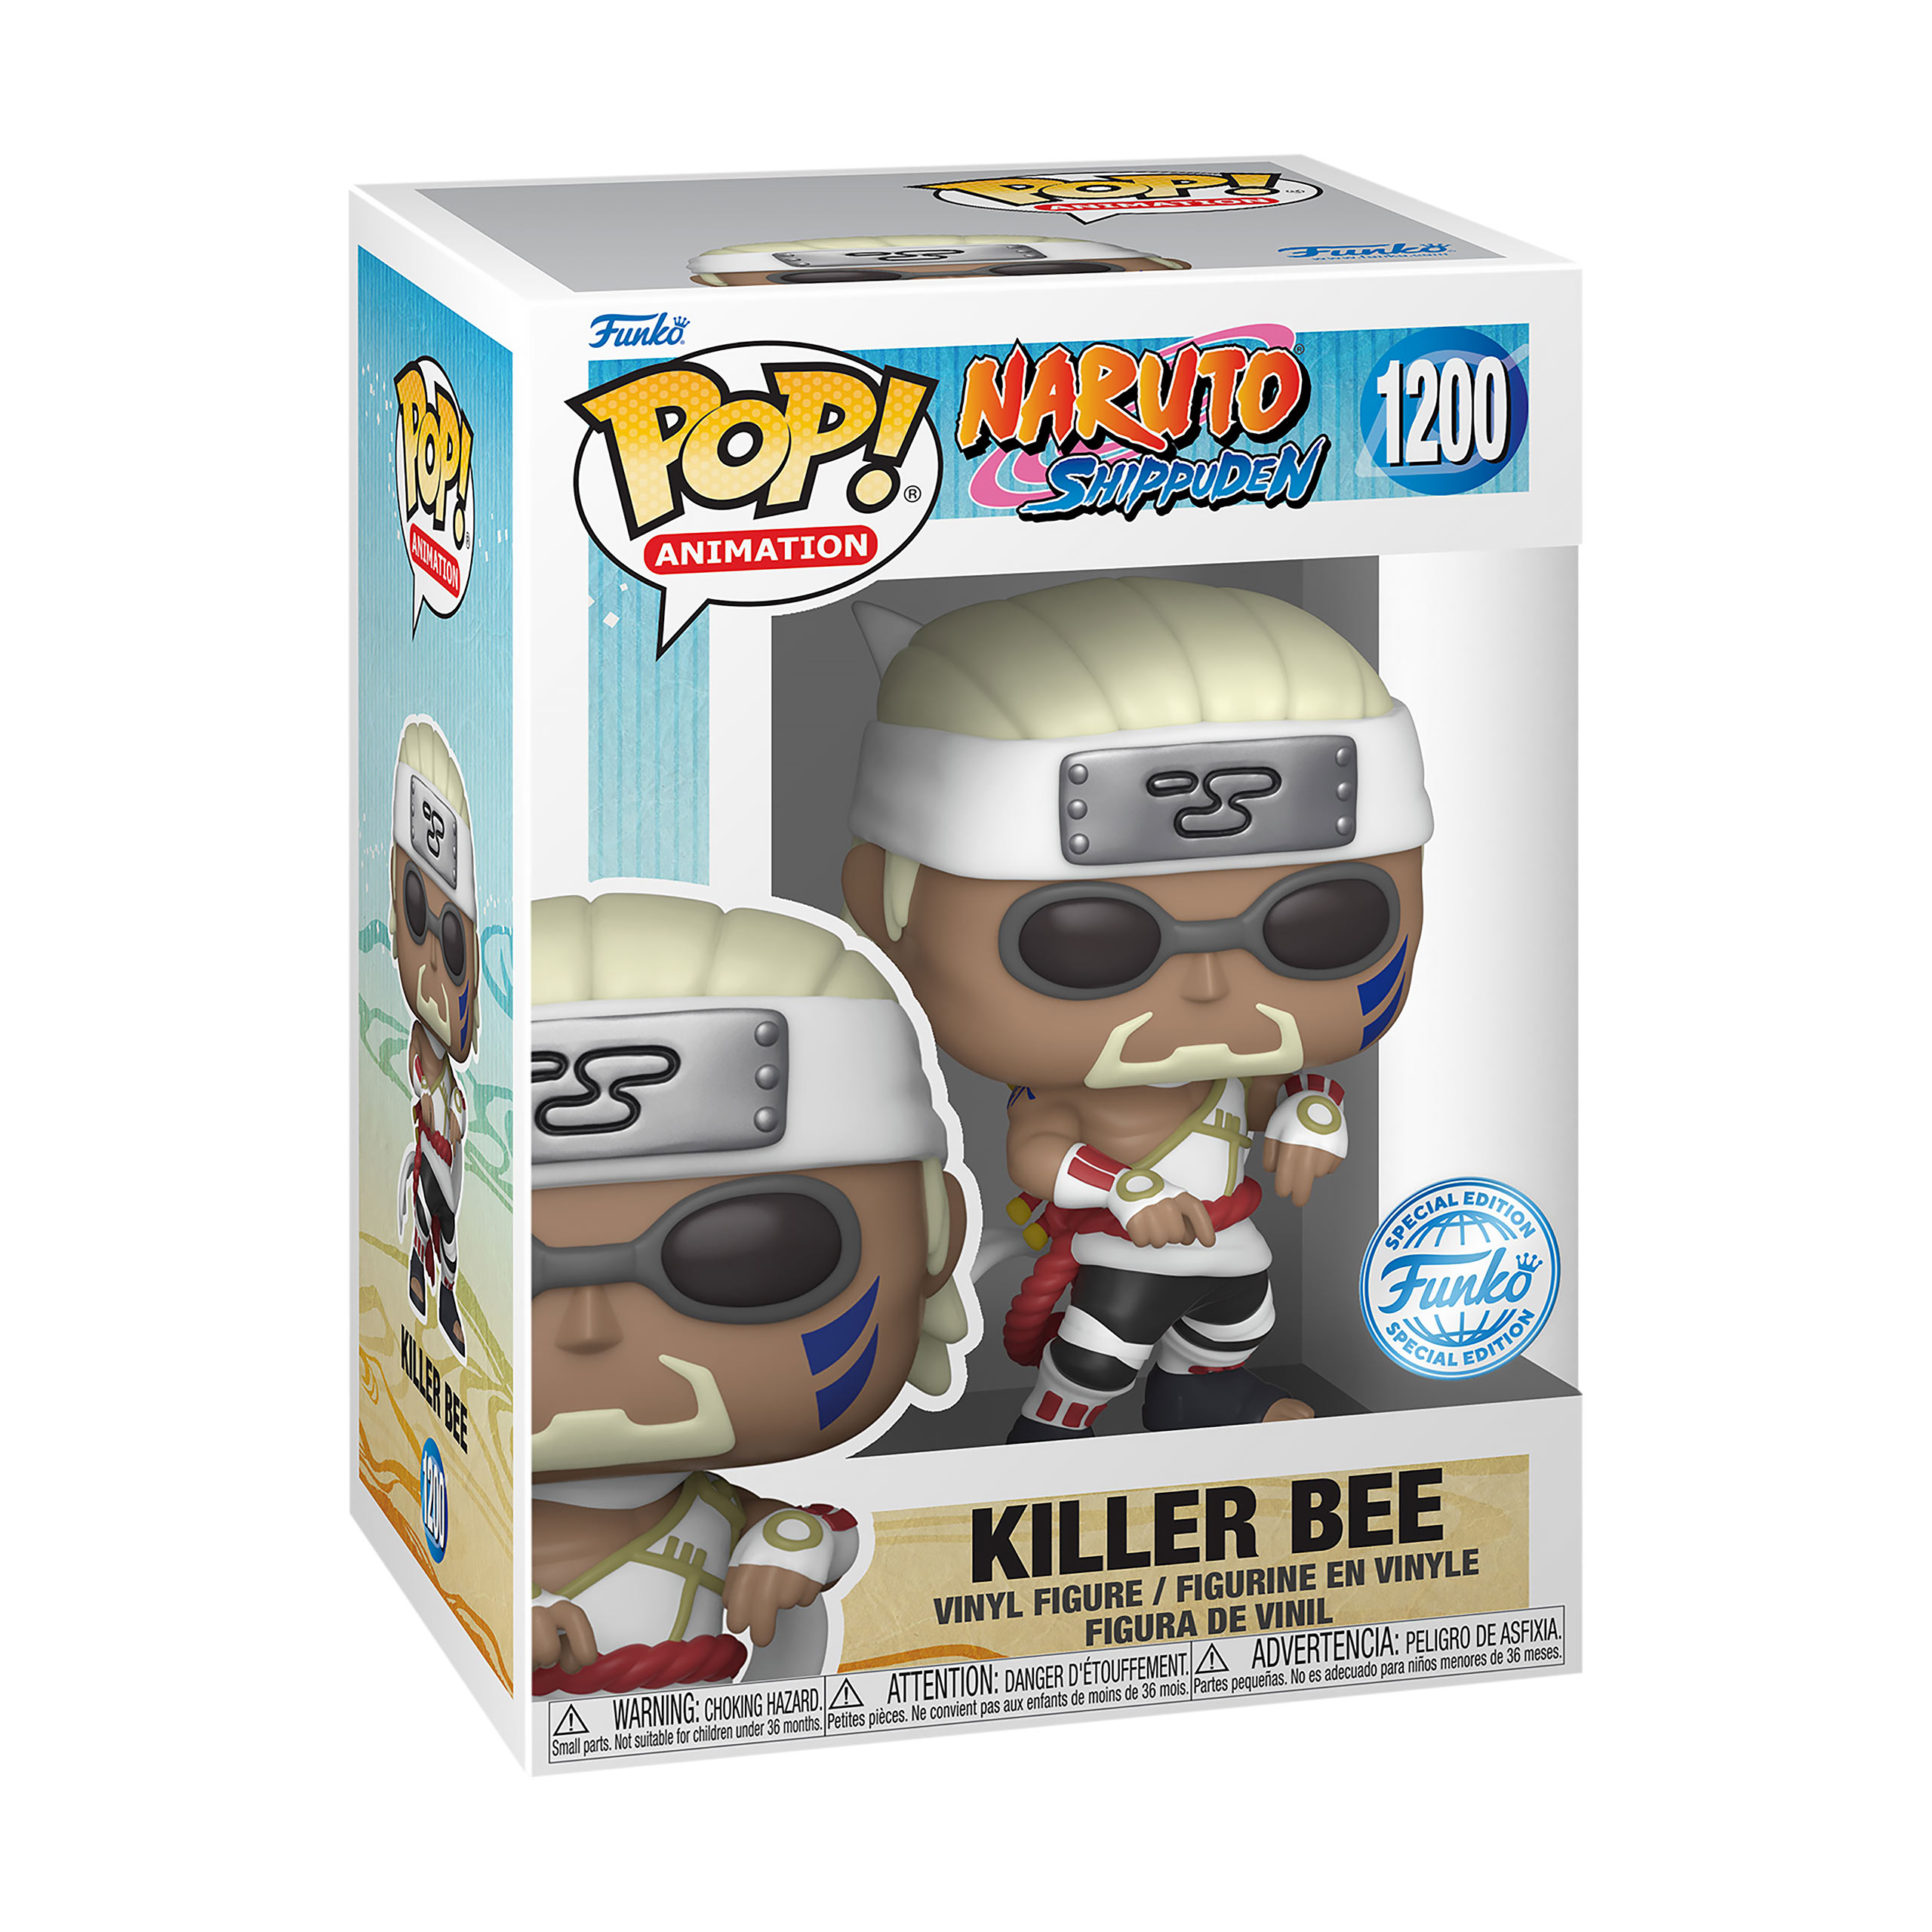 Naruto - Killer Bee Funko Pop Figure